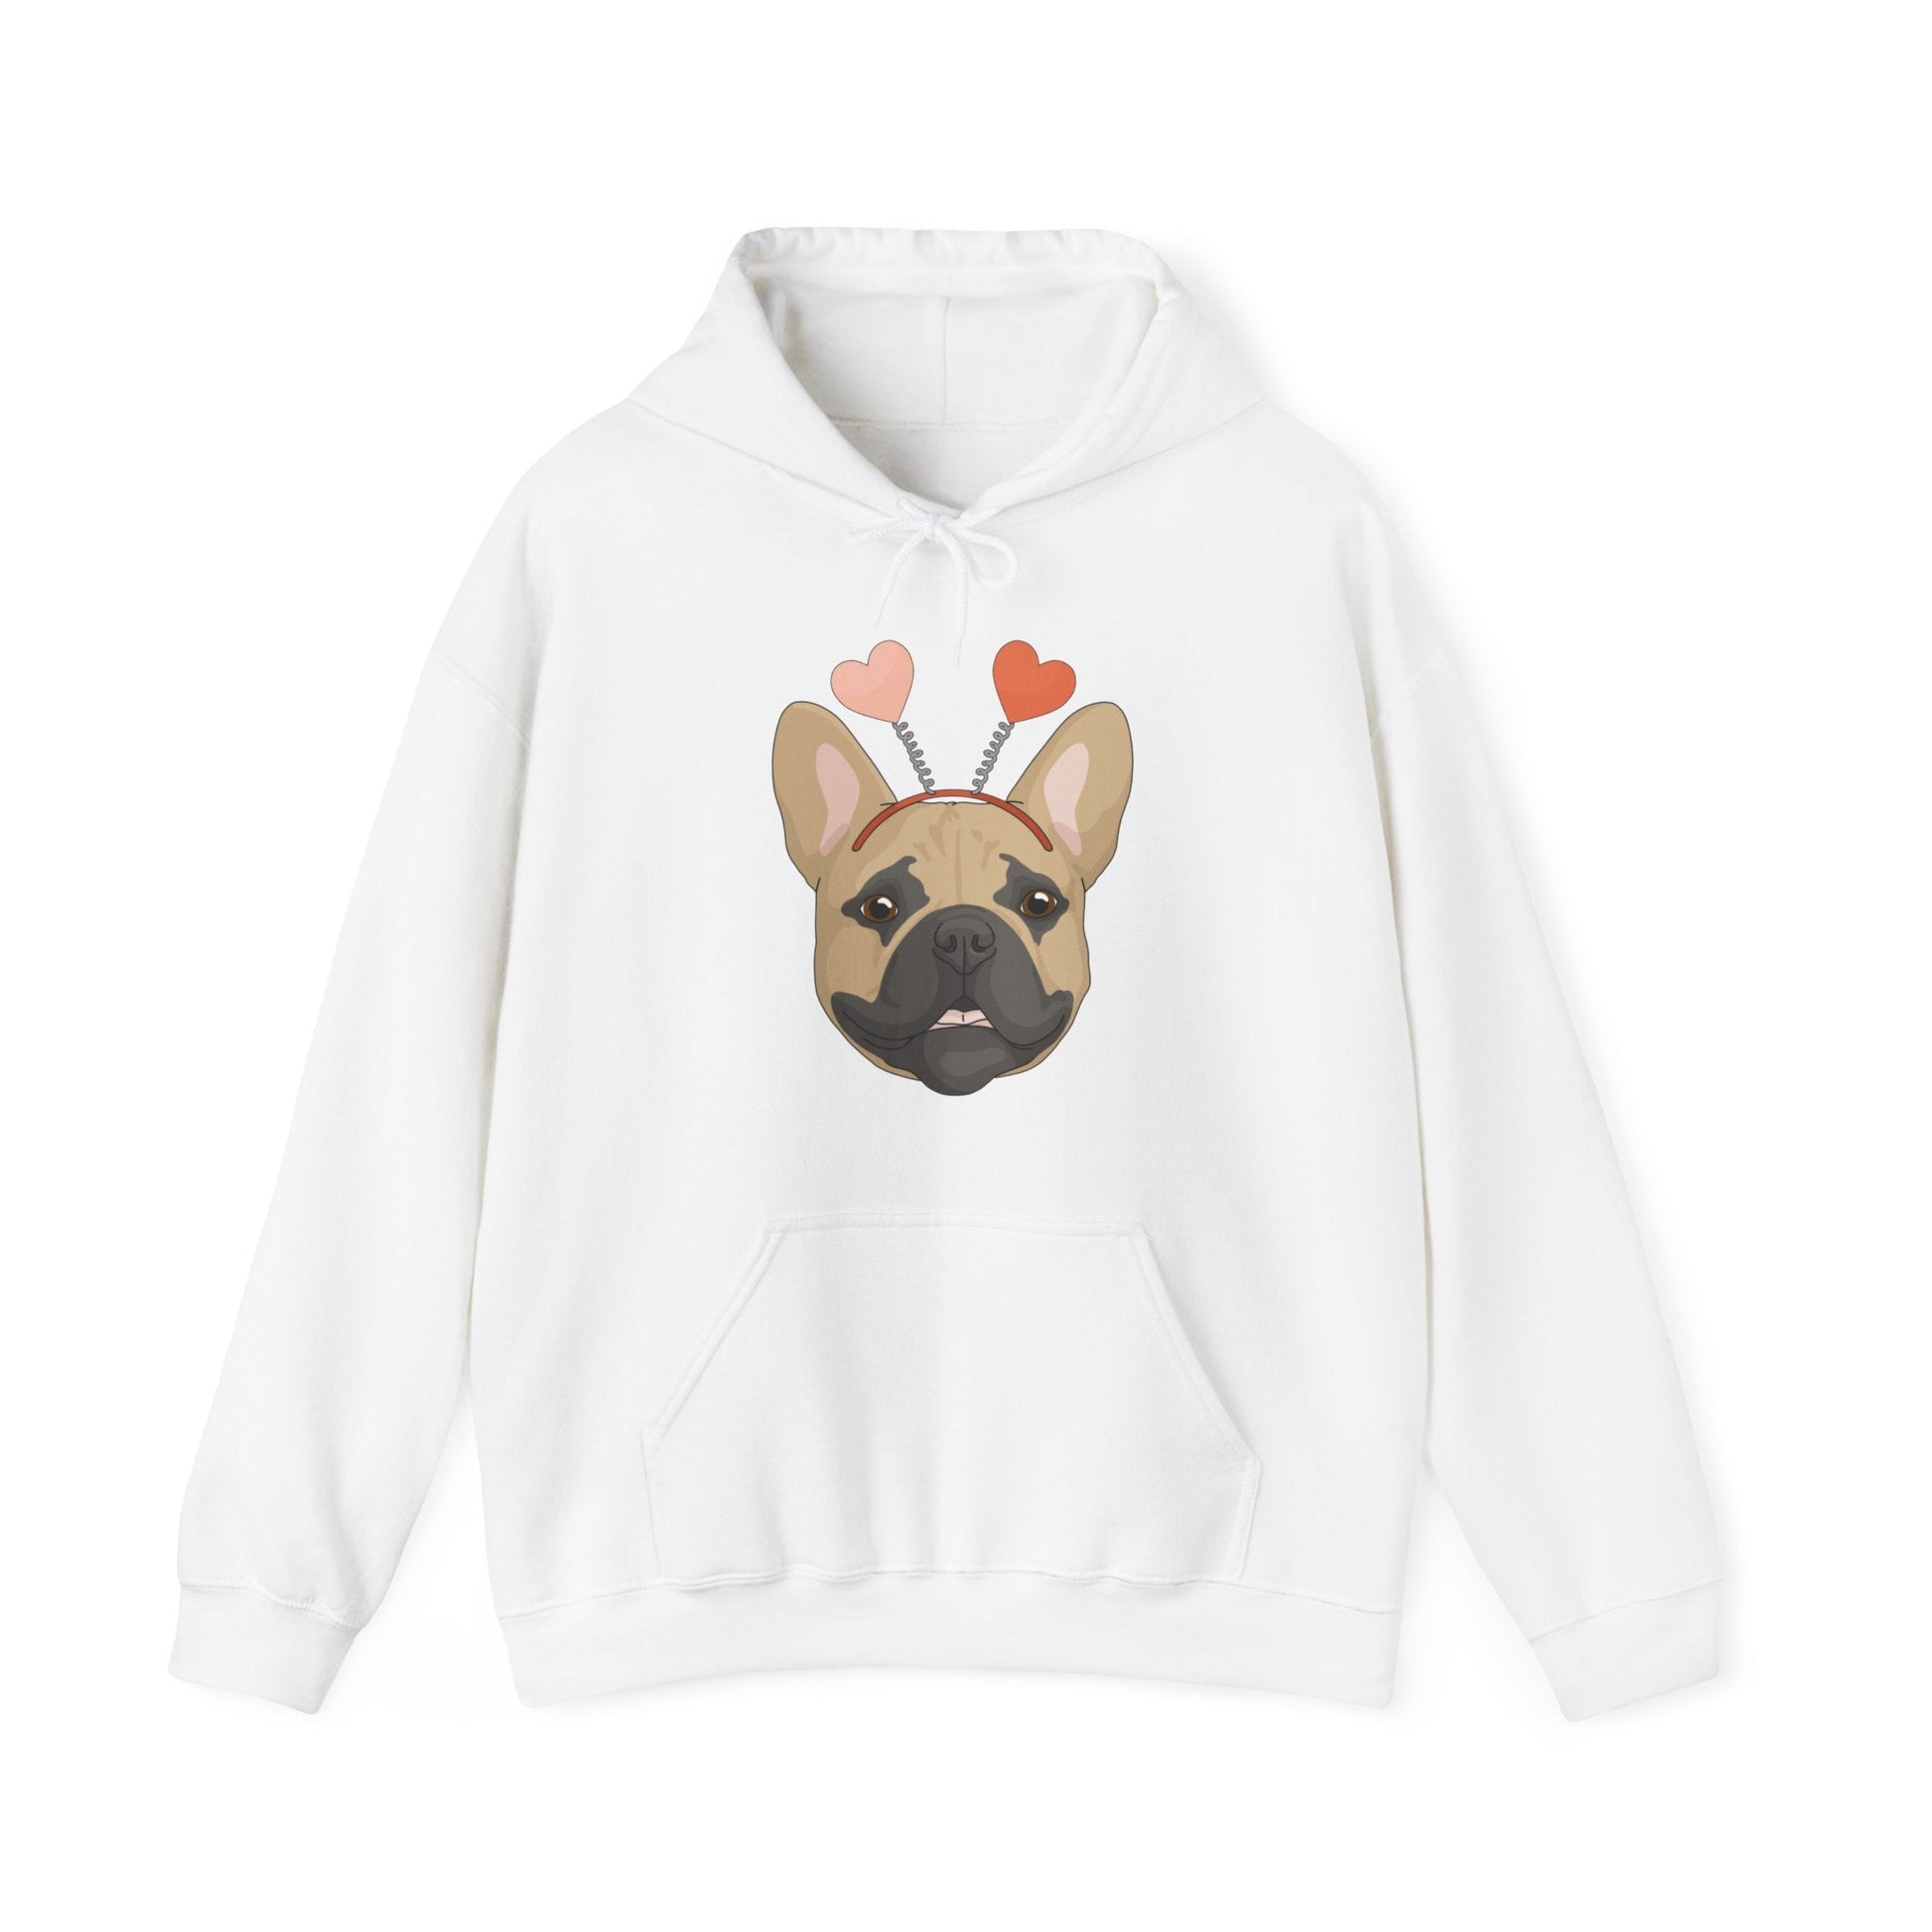 A Very Frenchie Valentine | Hooded Sweatshirt - Detezi Designs-27763486961822612019